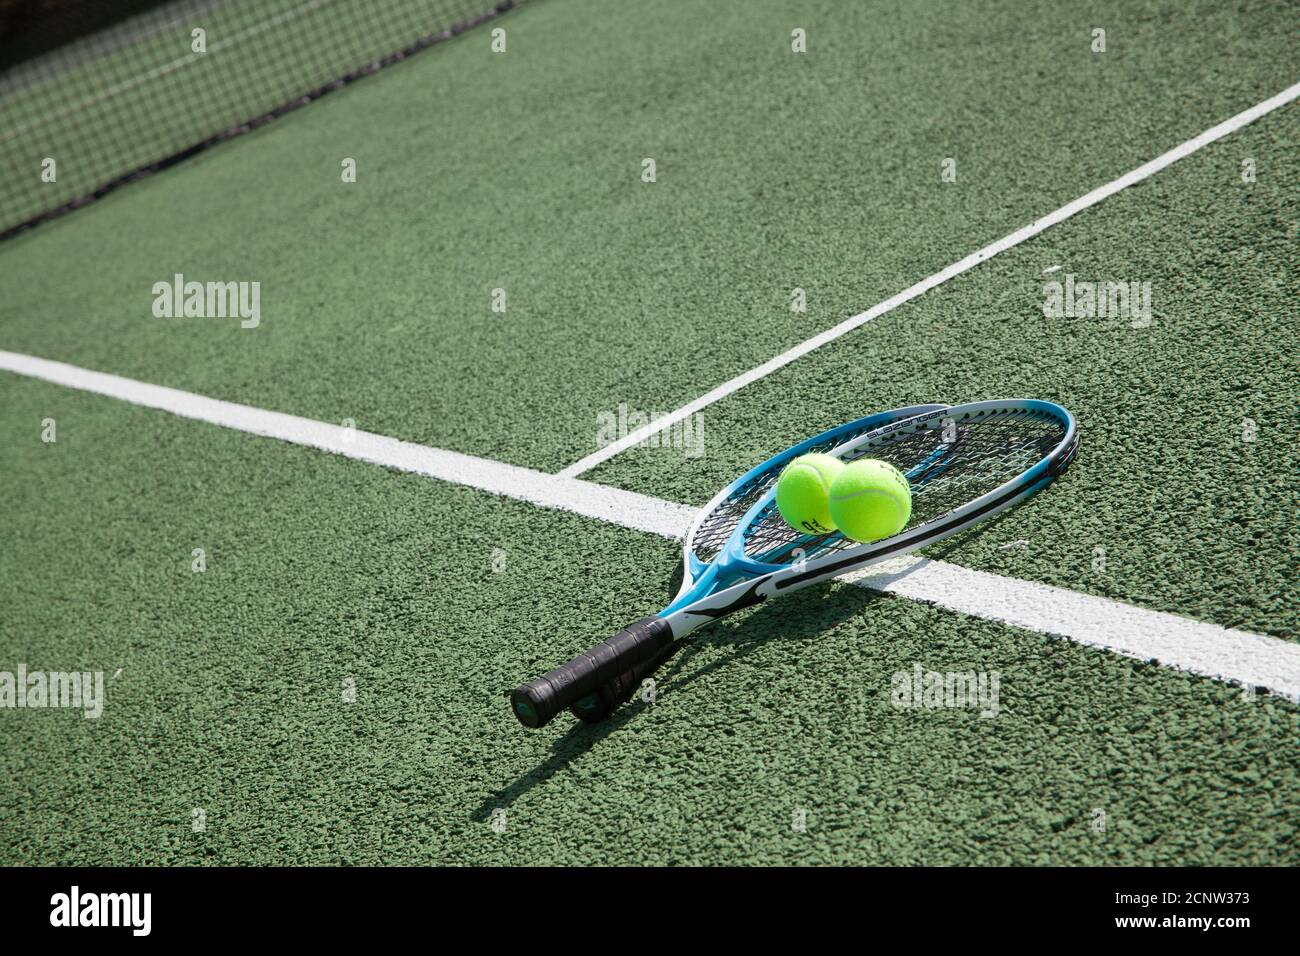 Tennis rackets on a tennis court Stock Photo